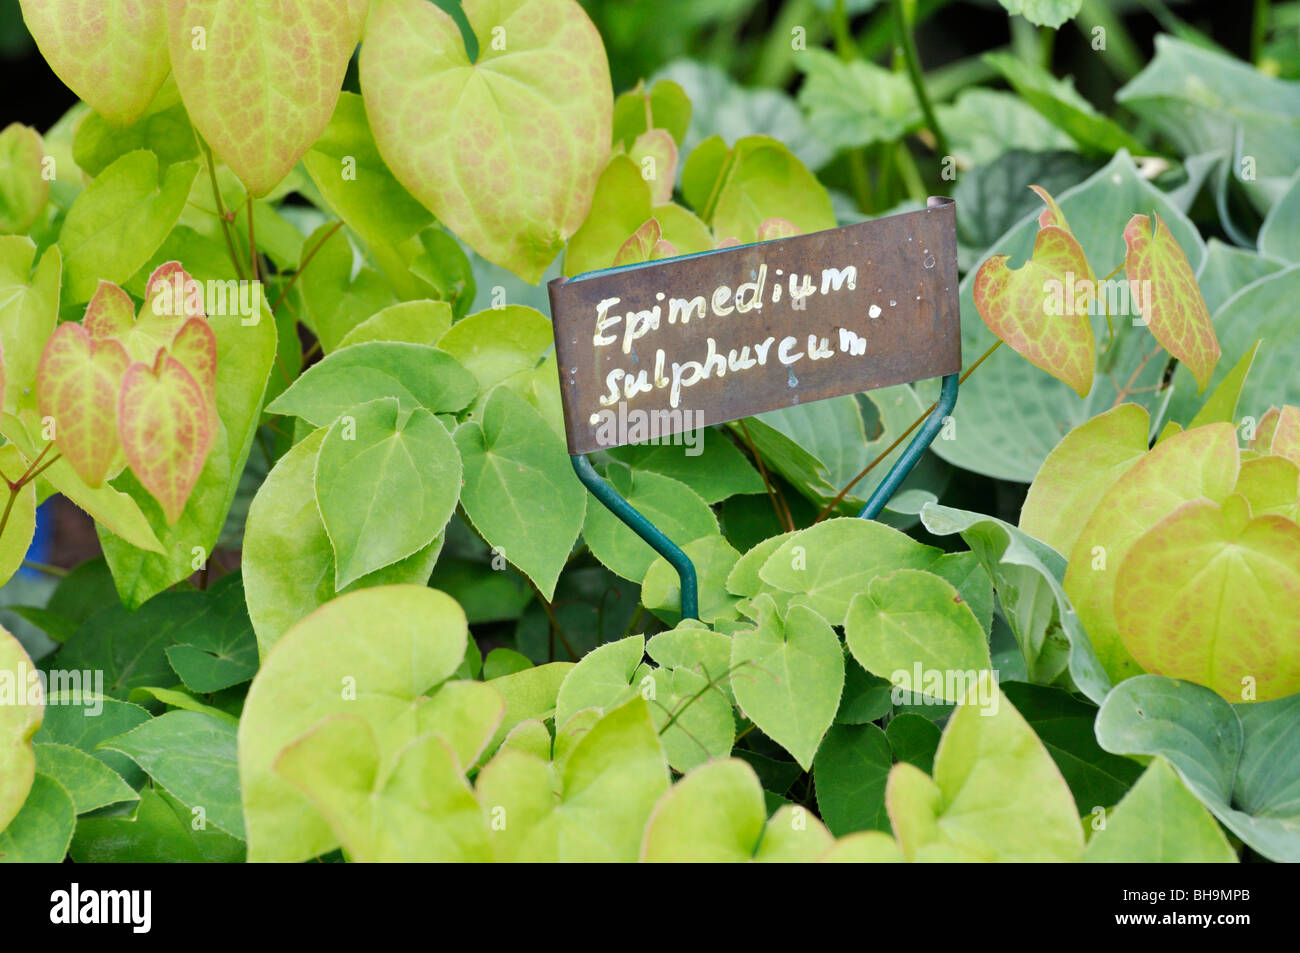 Barrenwort (Epimedium x versicolor 'Sulphureum') with plant label Stock Photo